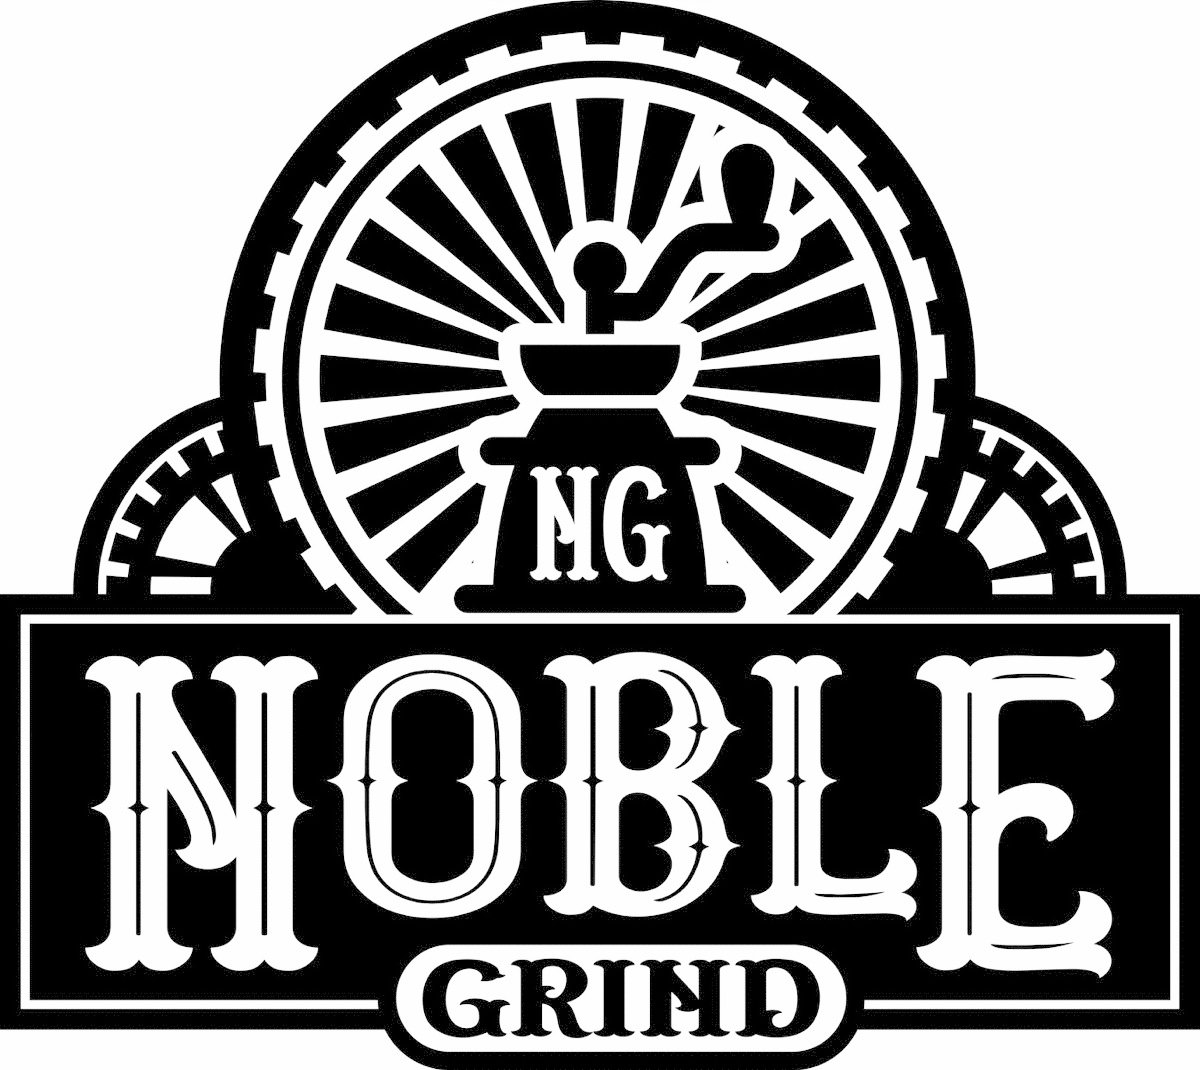  NOBLE GRIND NG